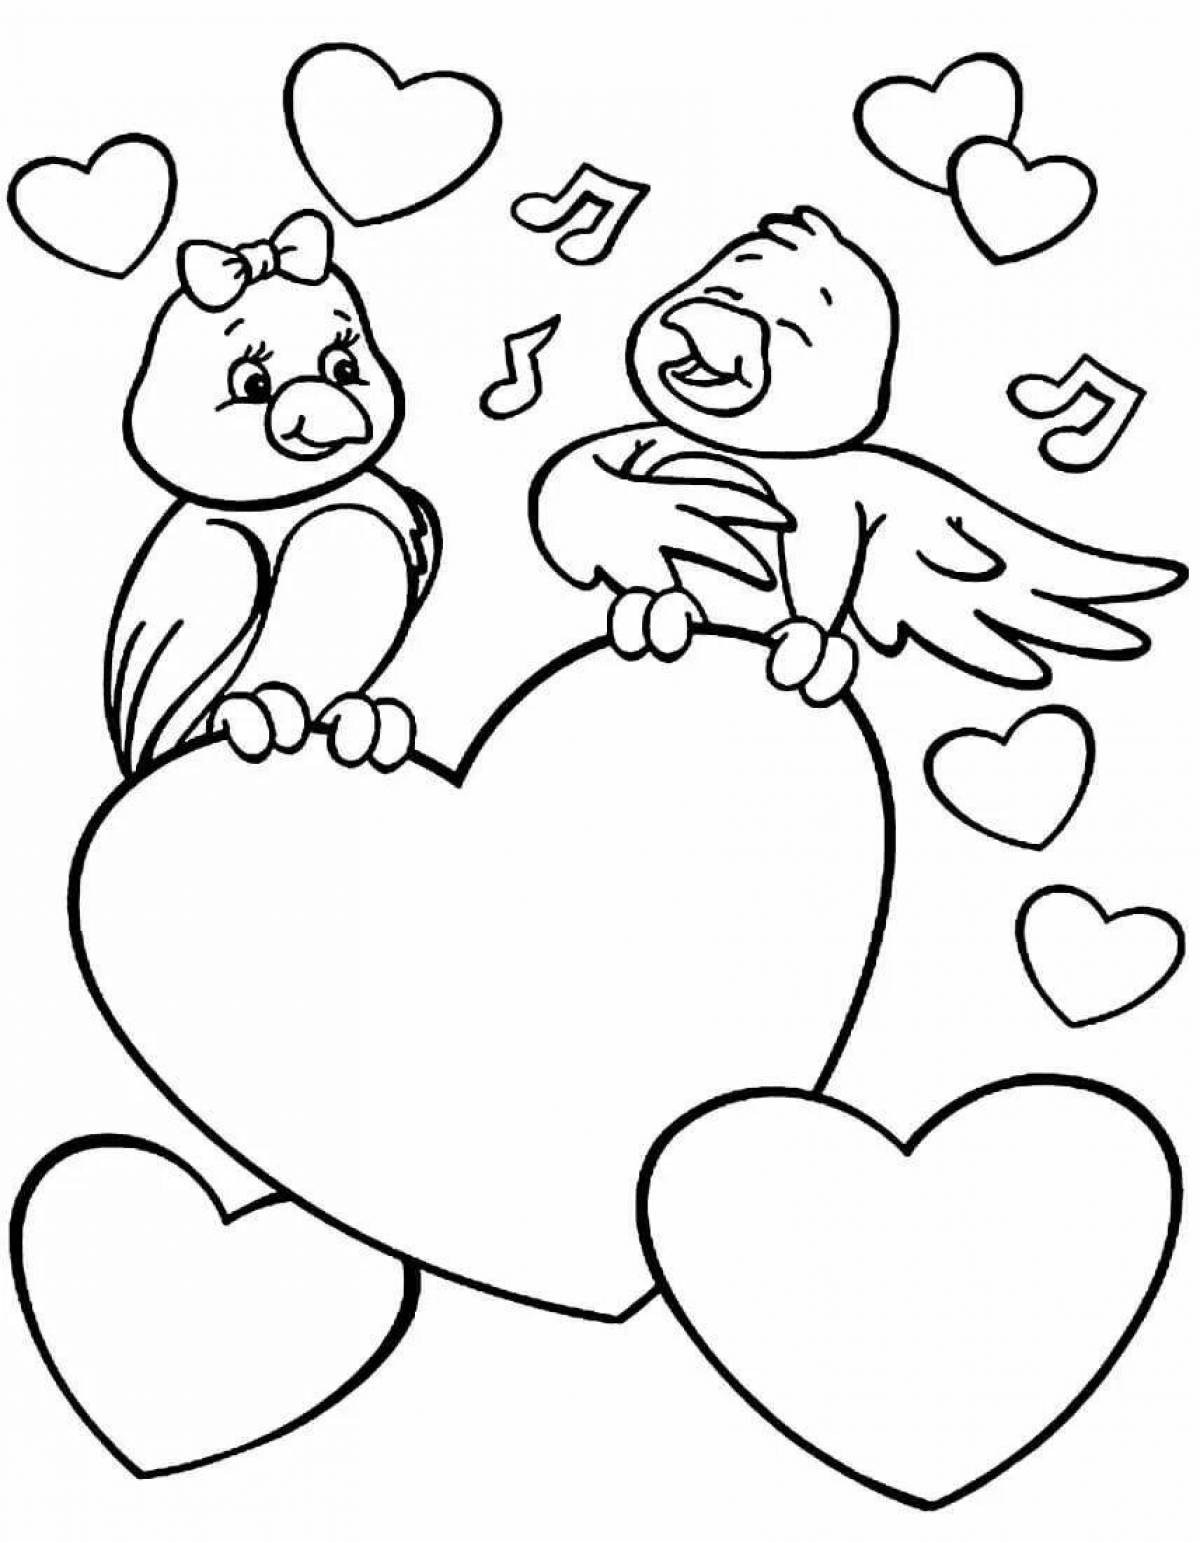 Happy valentine's day coloring book